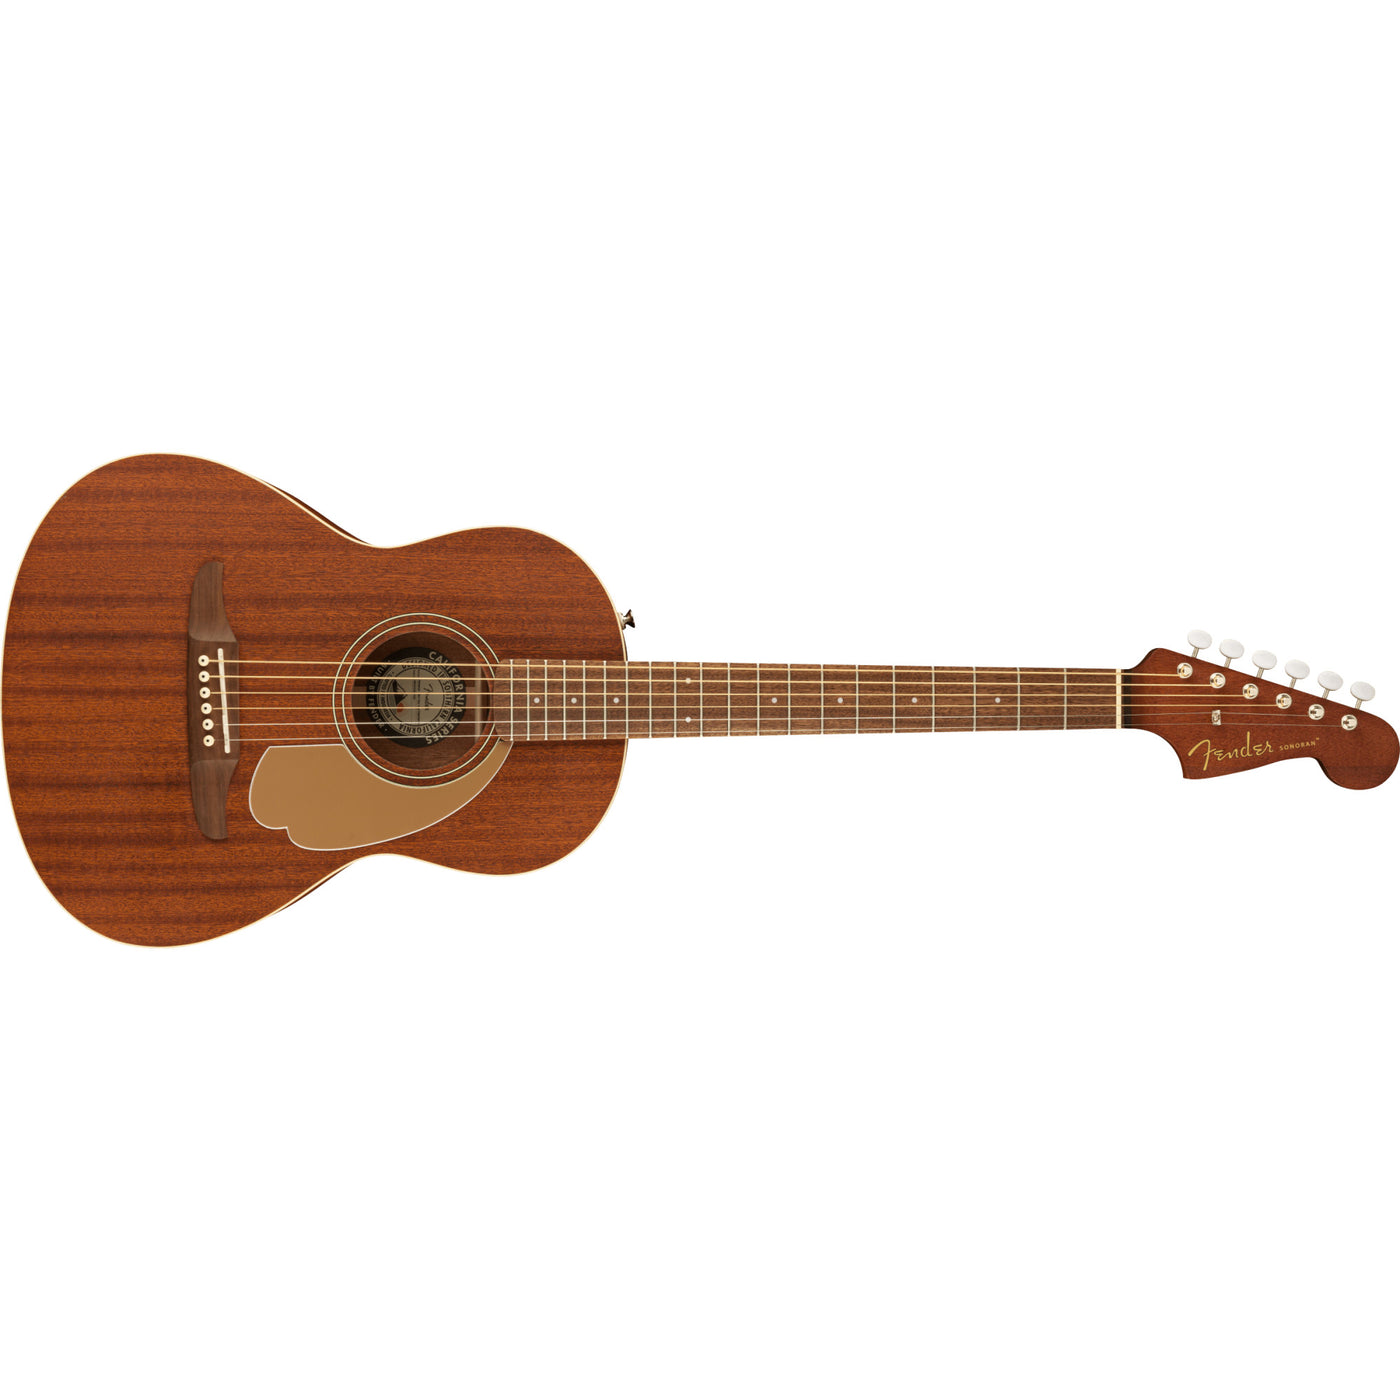 Sonoran Mini Acoustic Guitar with Bag, Natural Mahogany (0970770122)